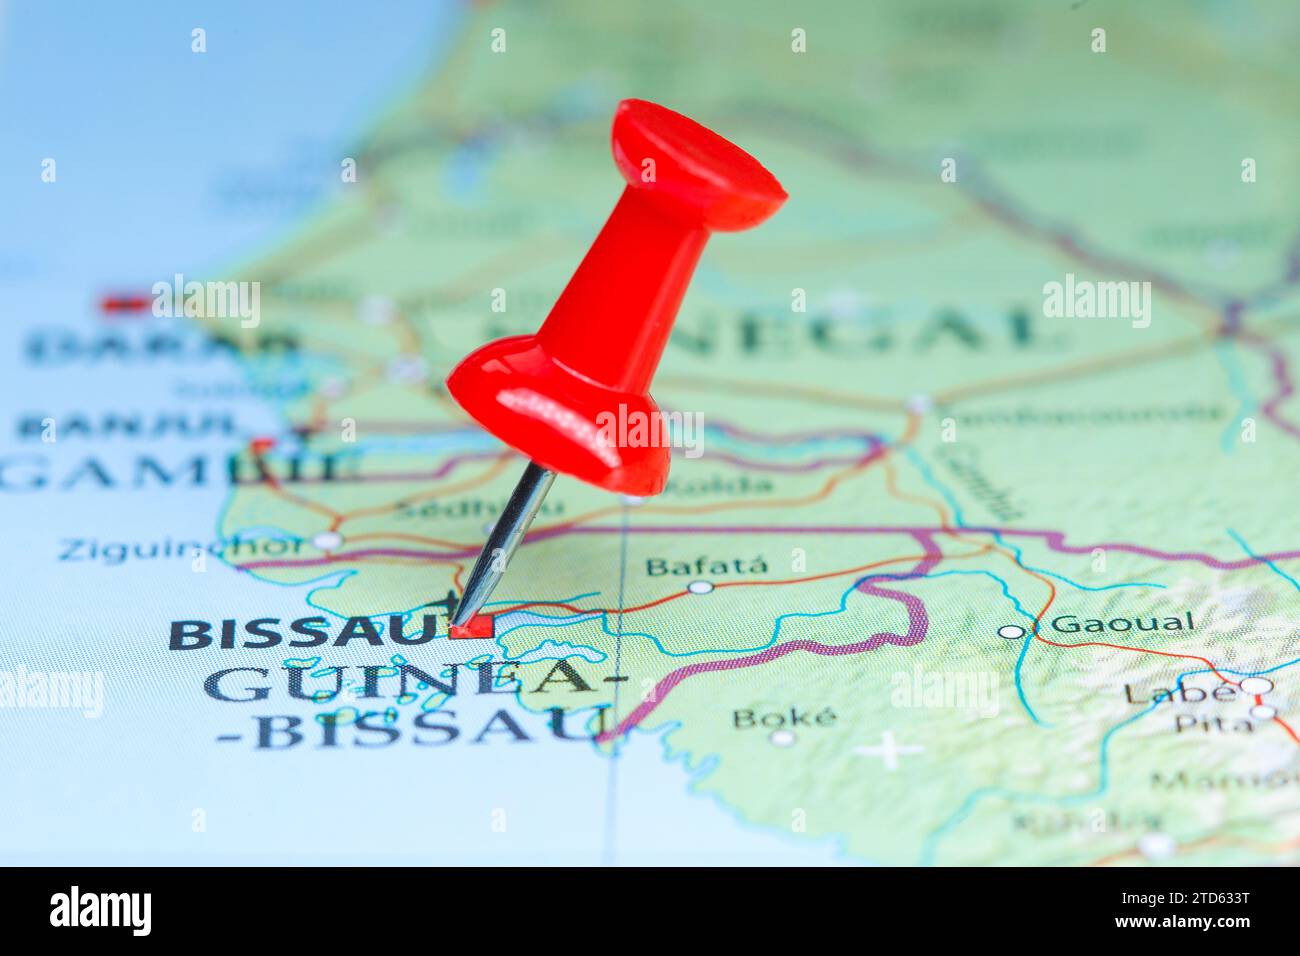 Bissau, Guinea Bissau pin on map Stock Photo